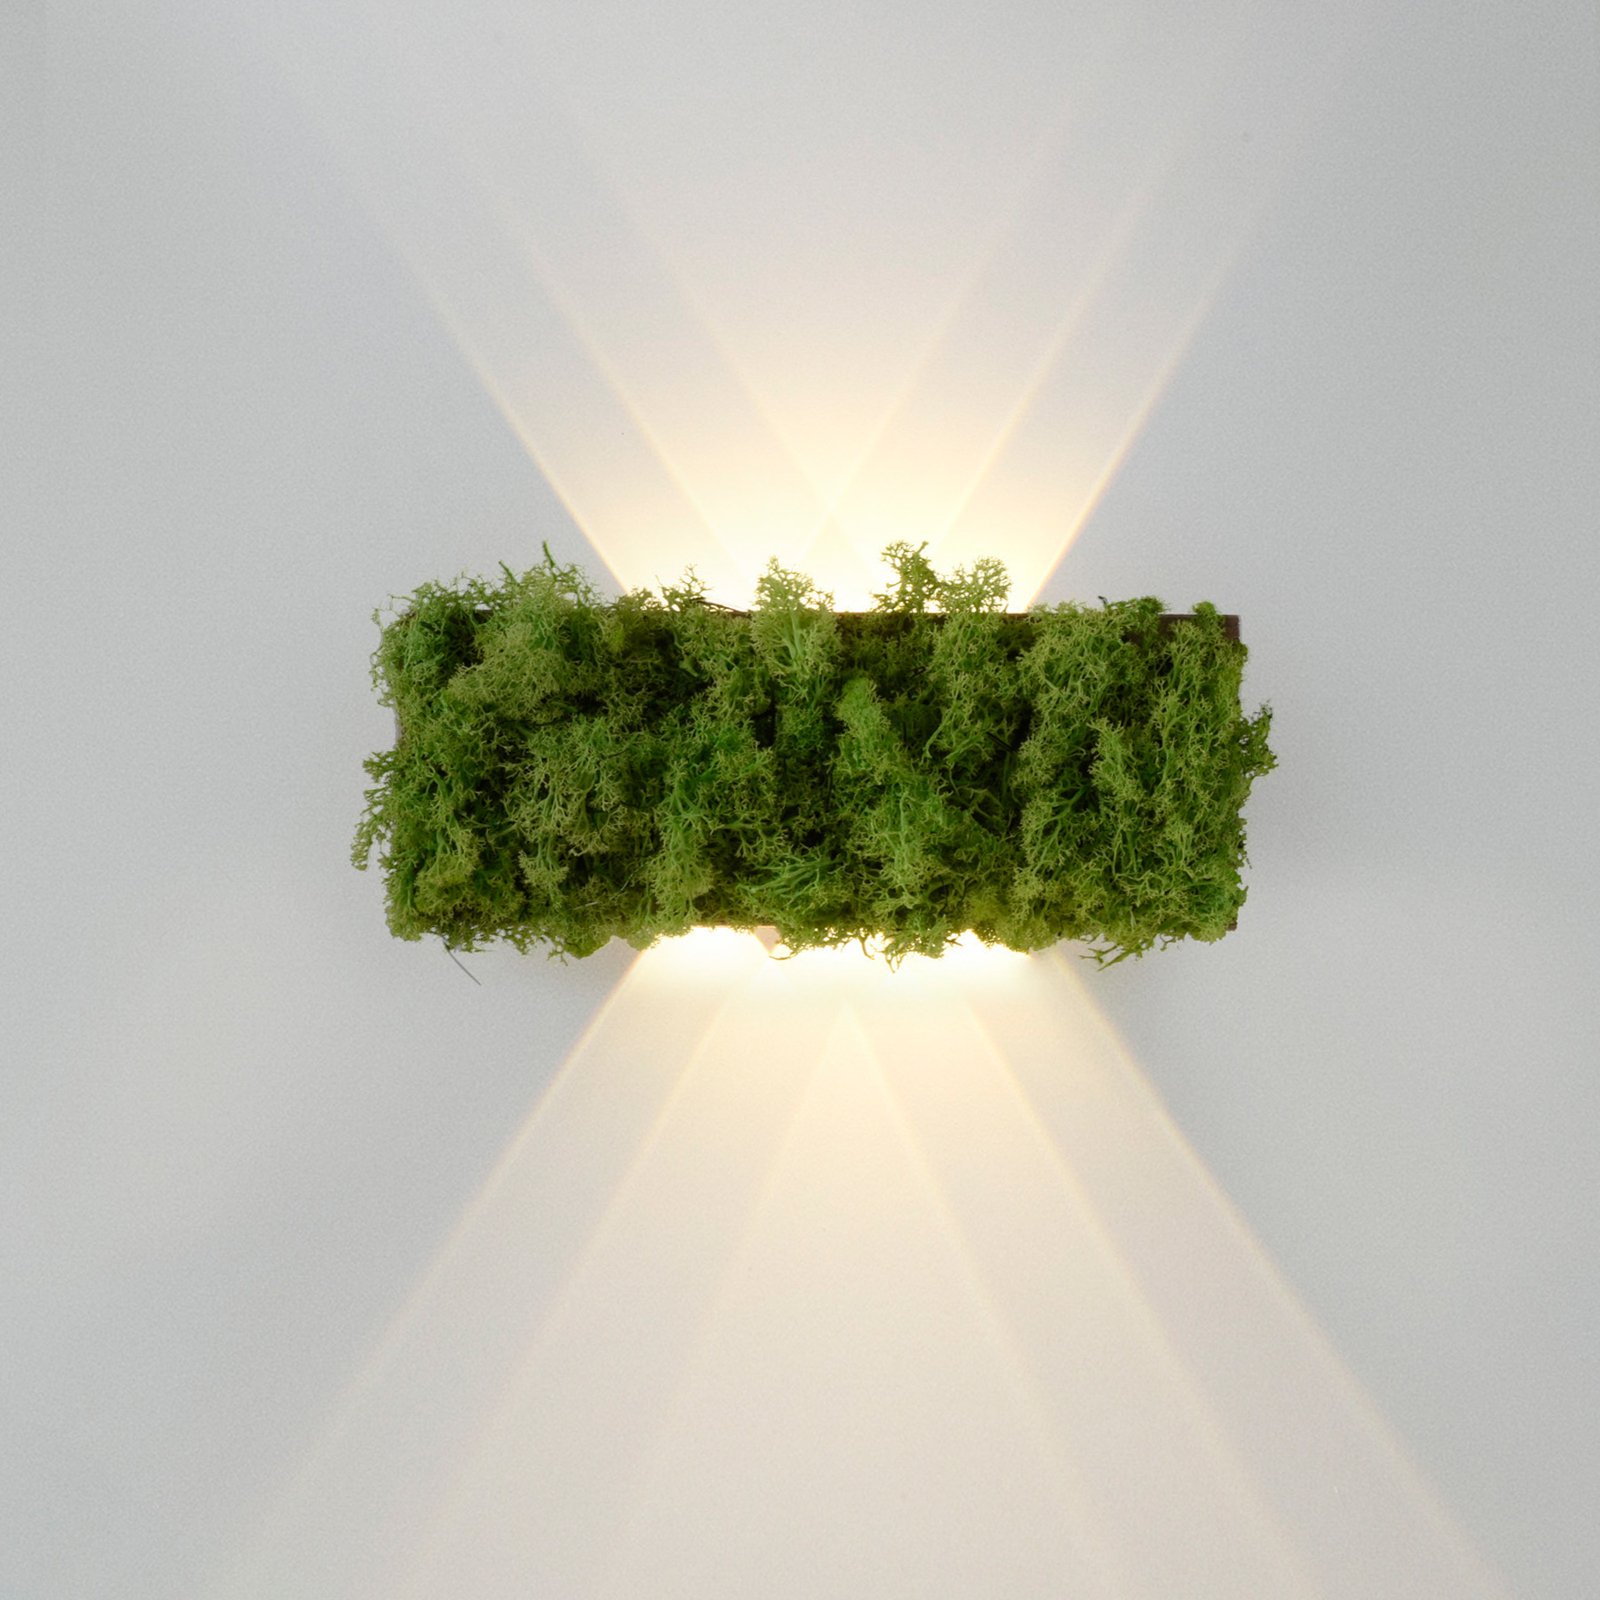 Green Carlo LED wandlamp, Up/Down, echt mos